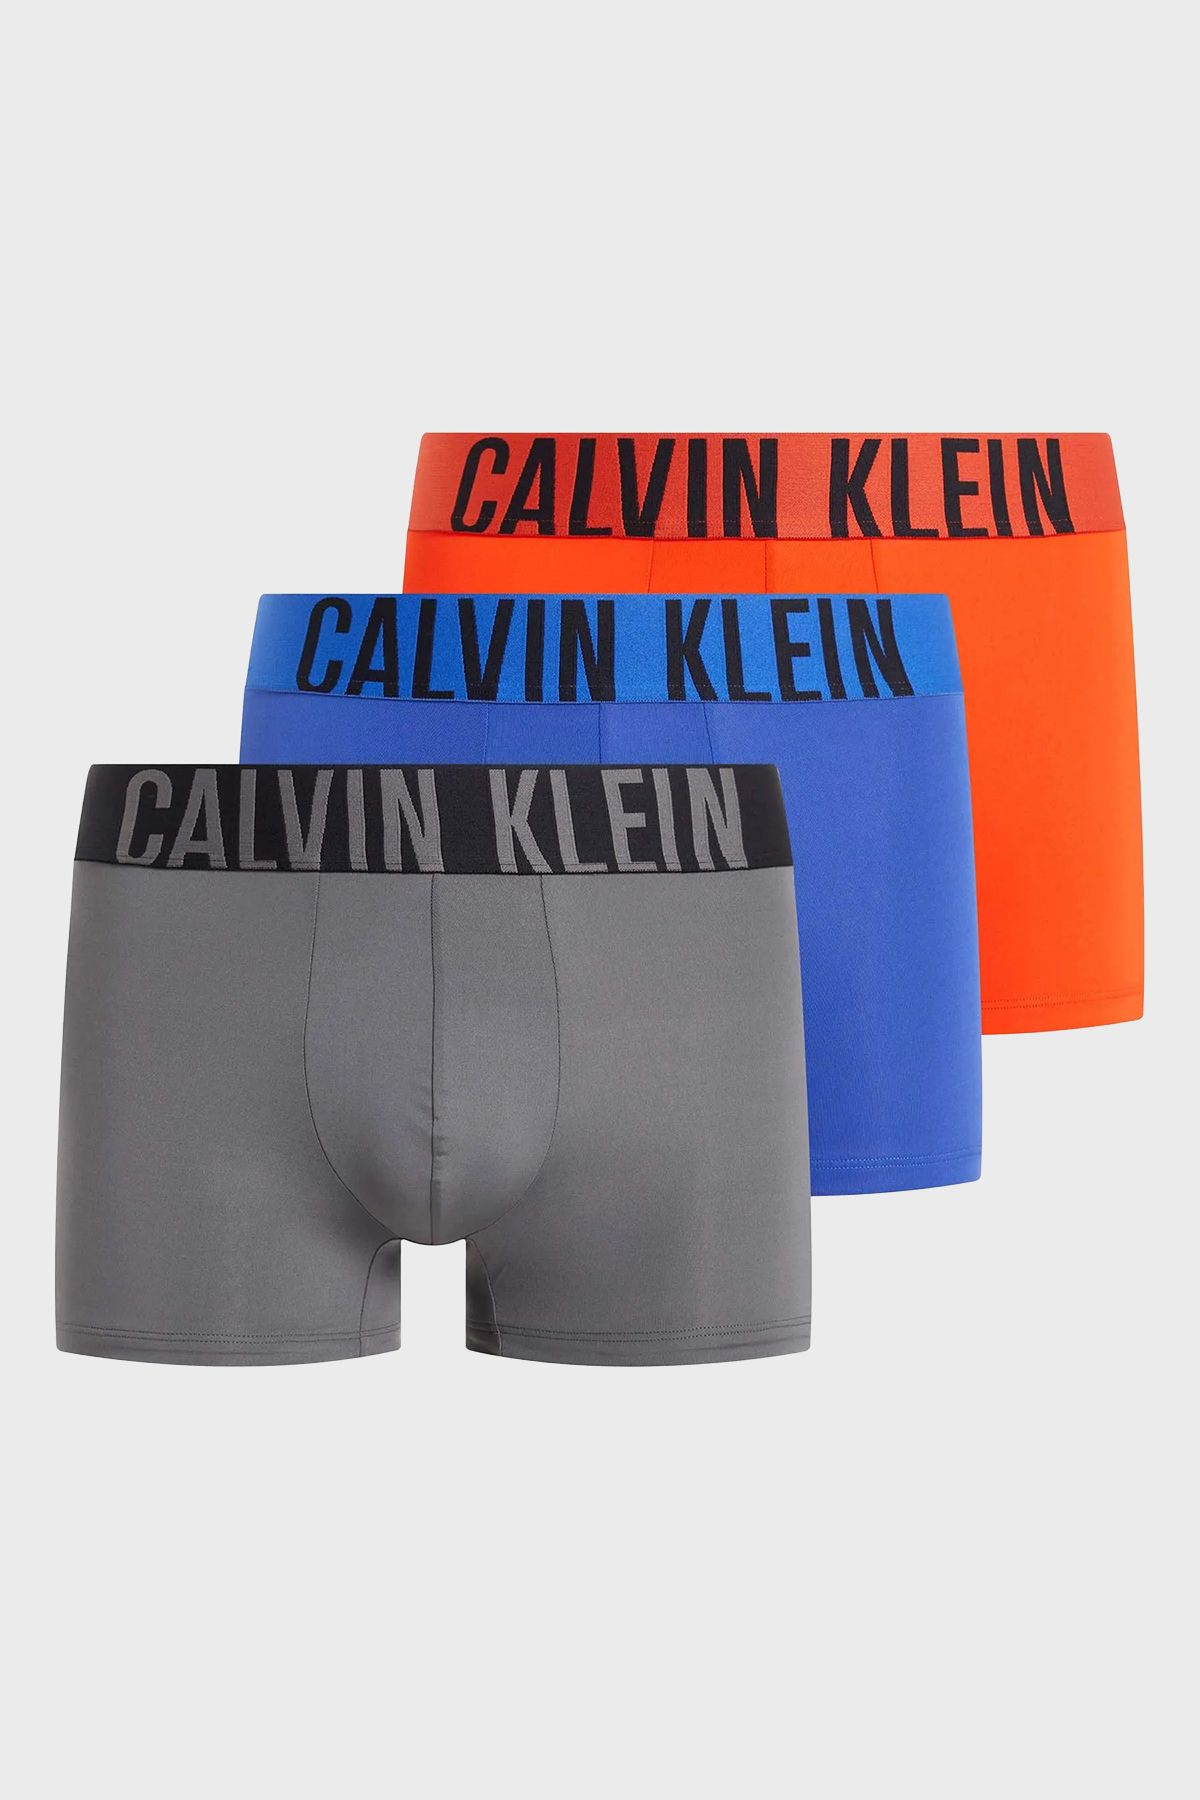 Calvin Klein Yumuşak Dokulu 3 Pack Boxer 000NB3775AMDI Erkek BOXER 000NB3775A MDI